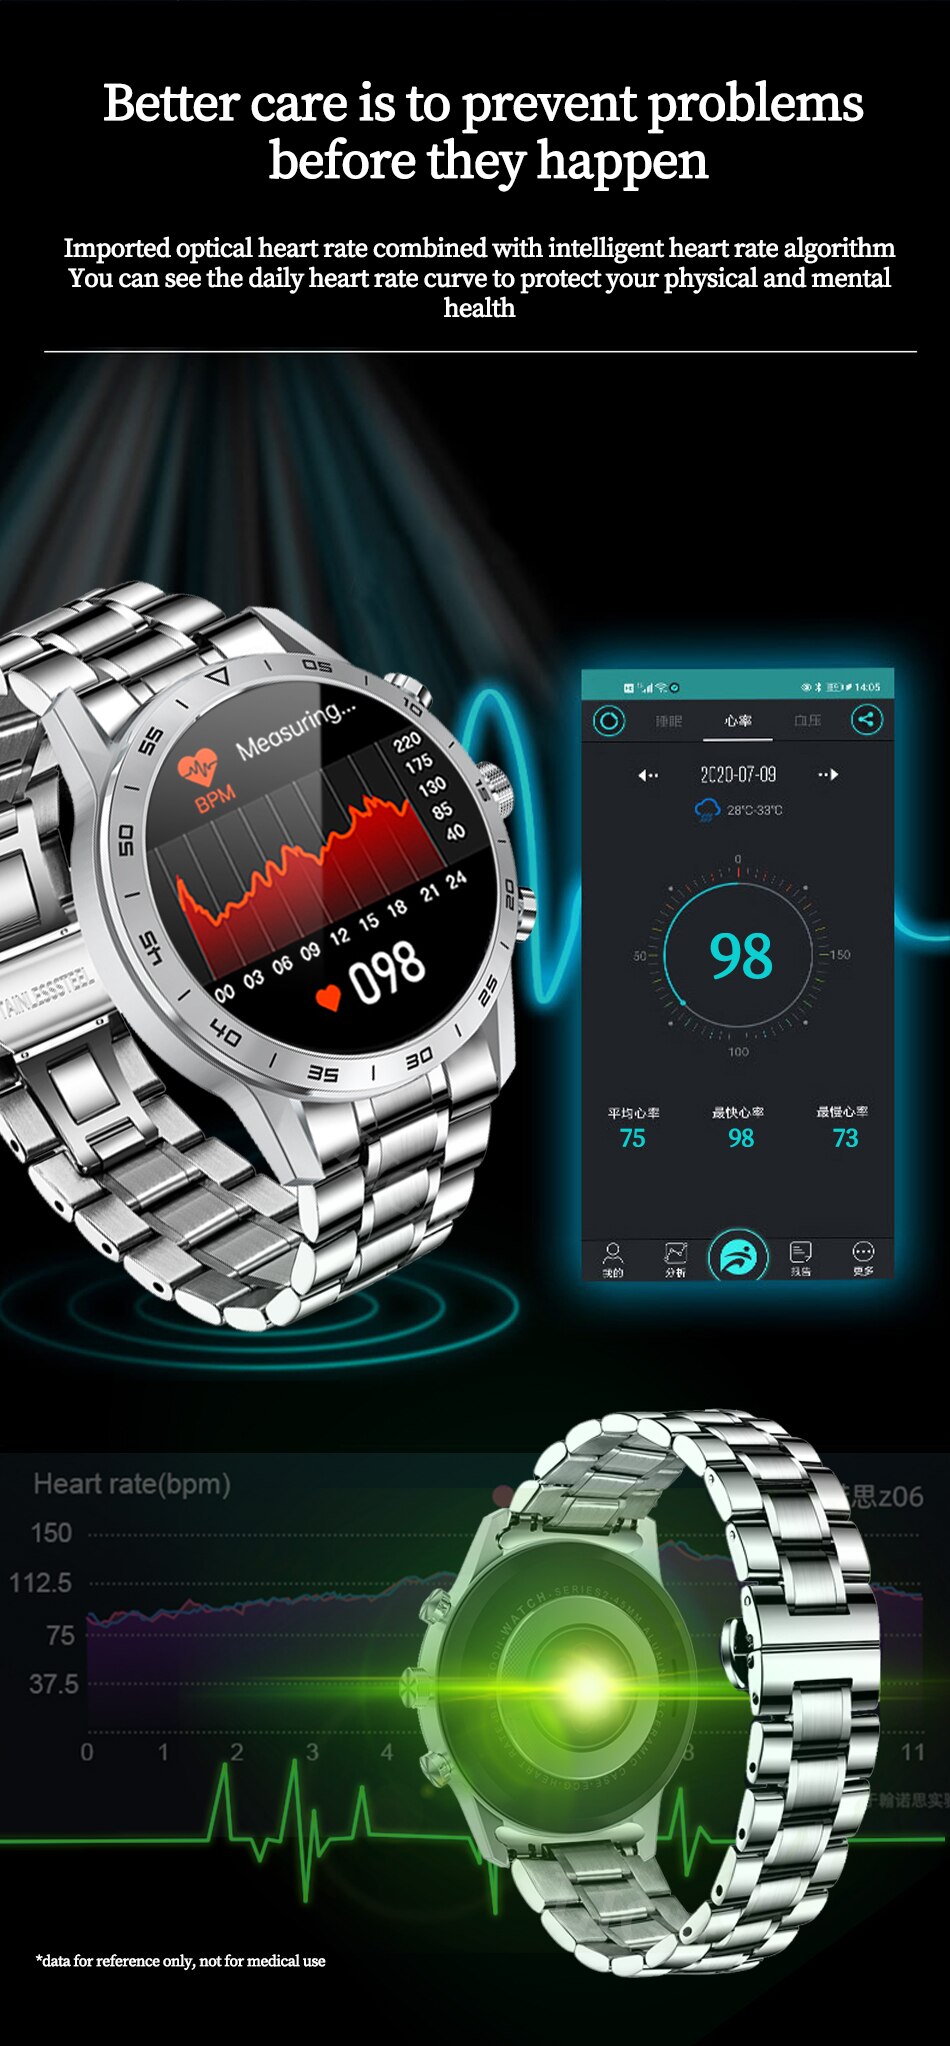 LIGE Turbo v1.1 Smart Watch